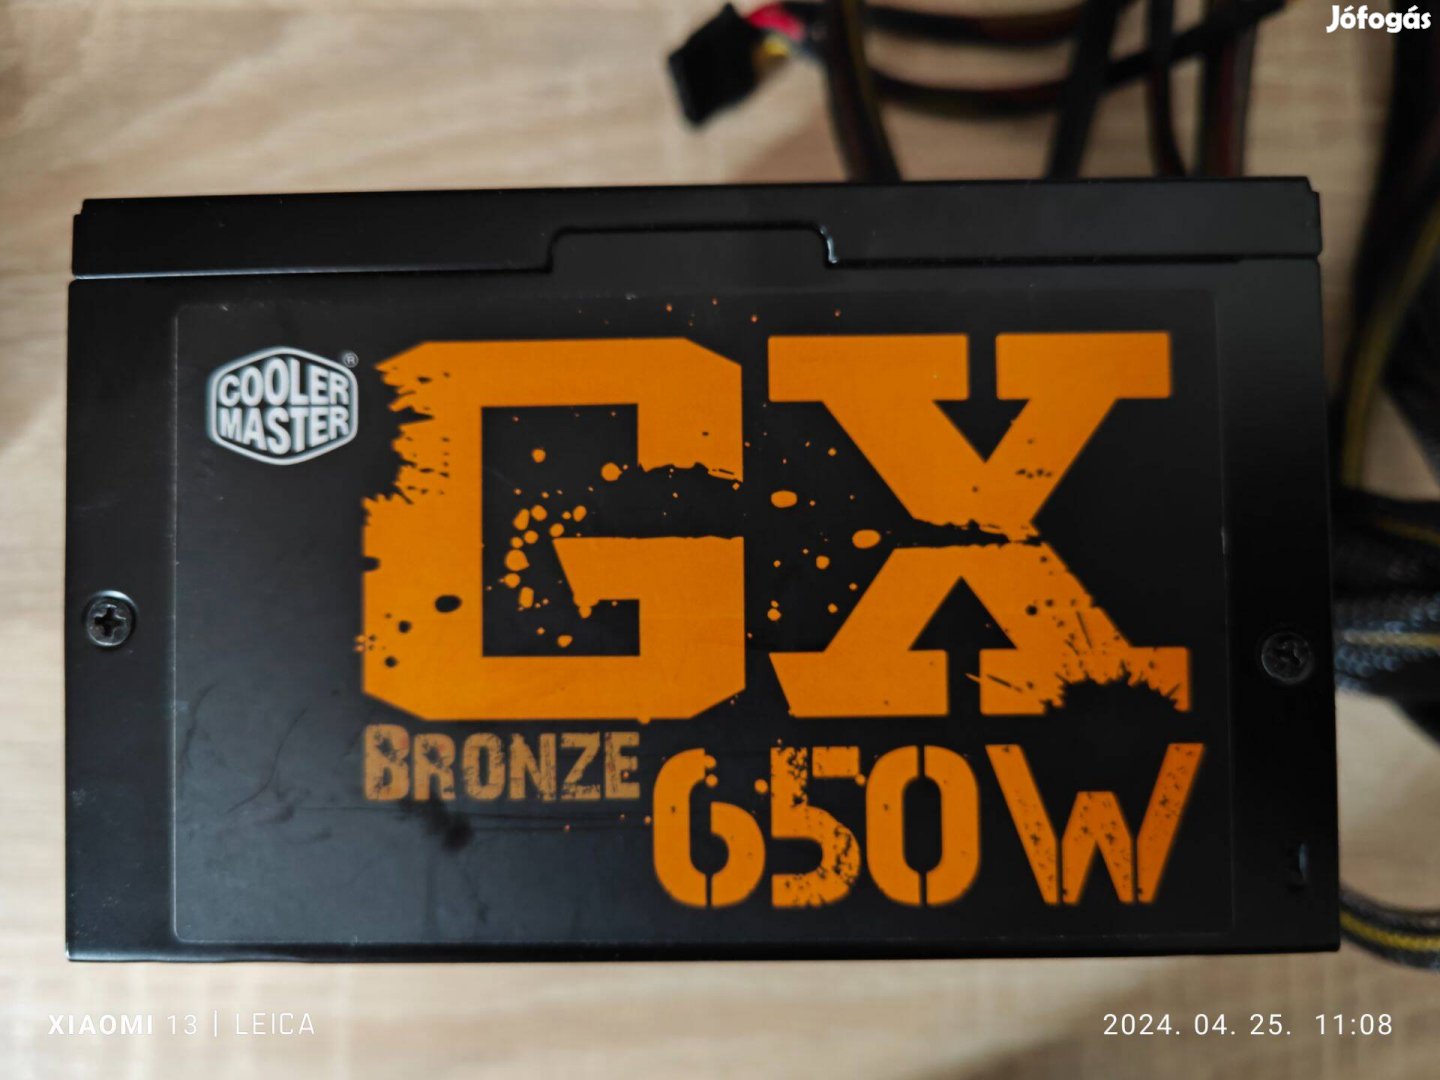 Cooler Master Gx 650W Bronze pc tápegység